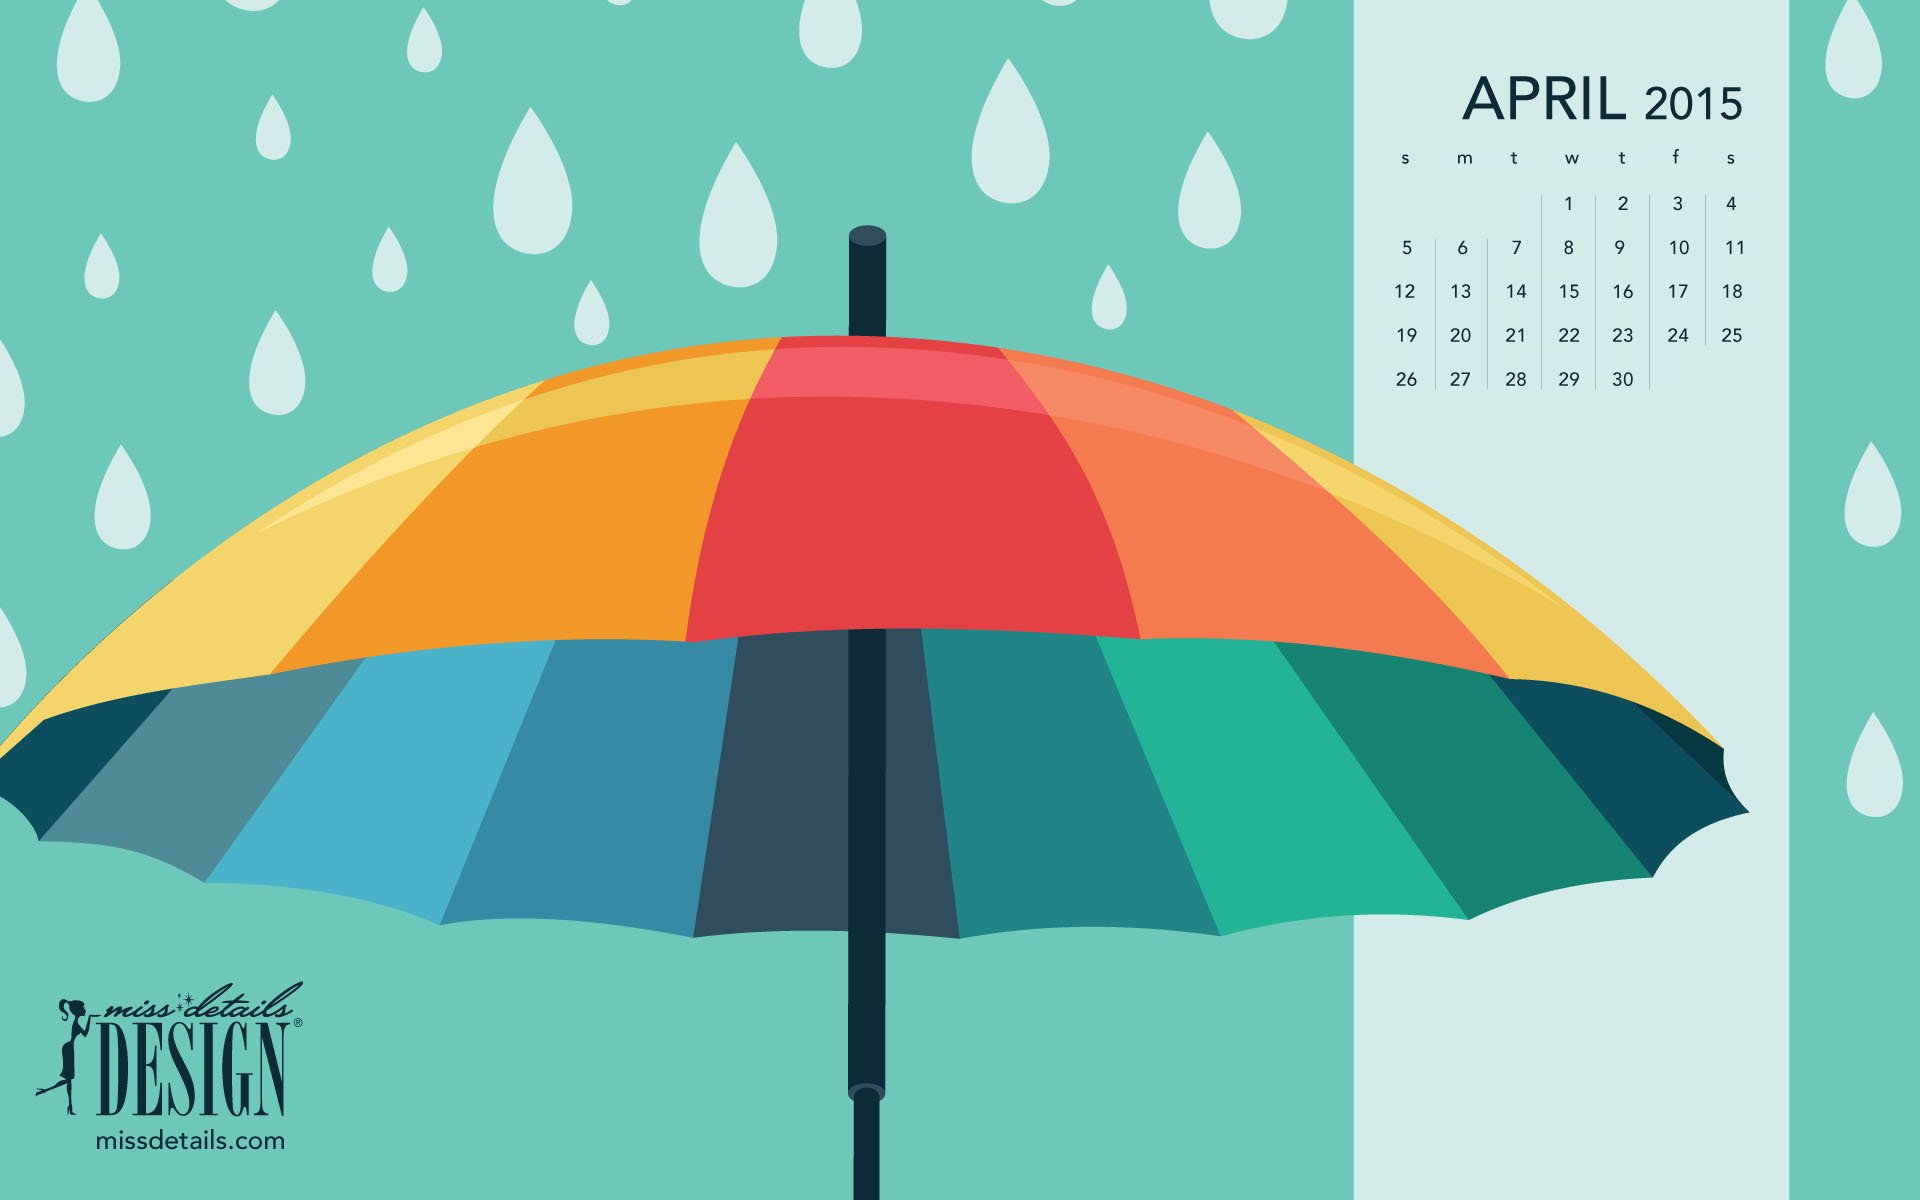  April 2015 desktop calendar from missdetailscom   April Showers